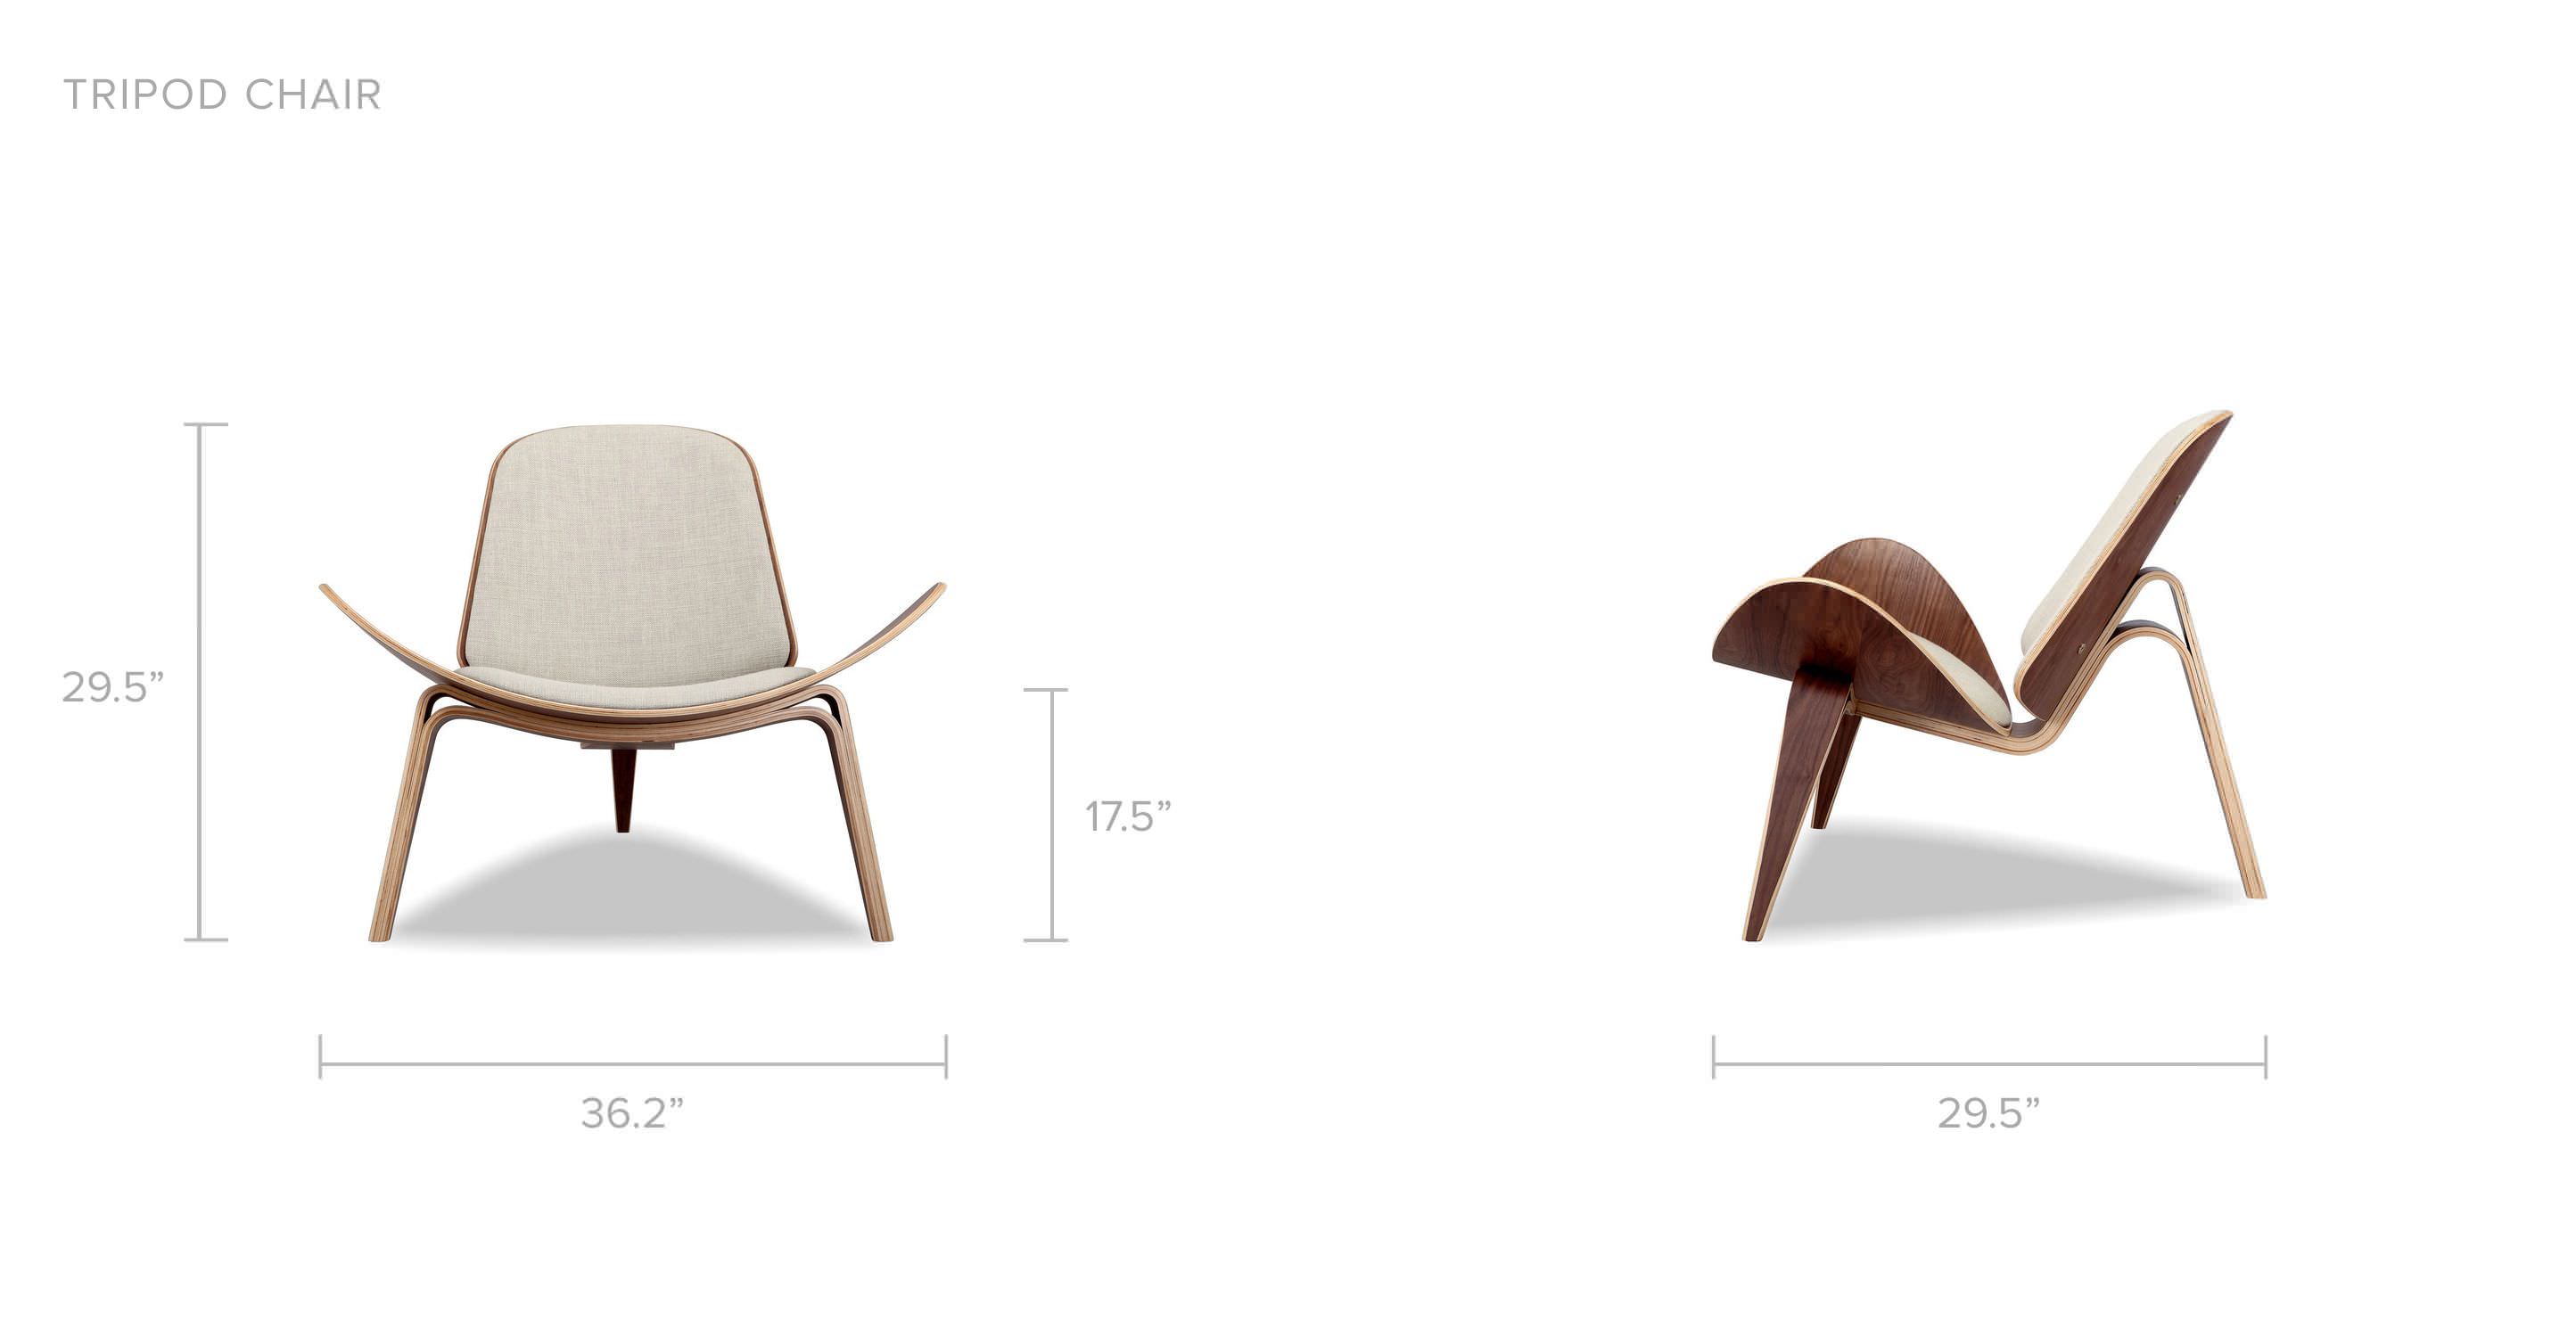 drawings-tripod-chair.jpg